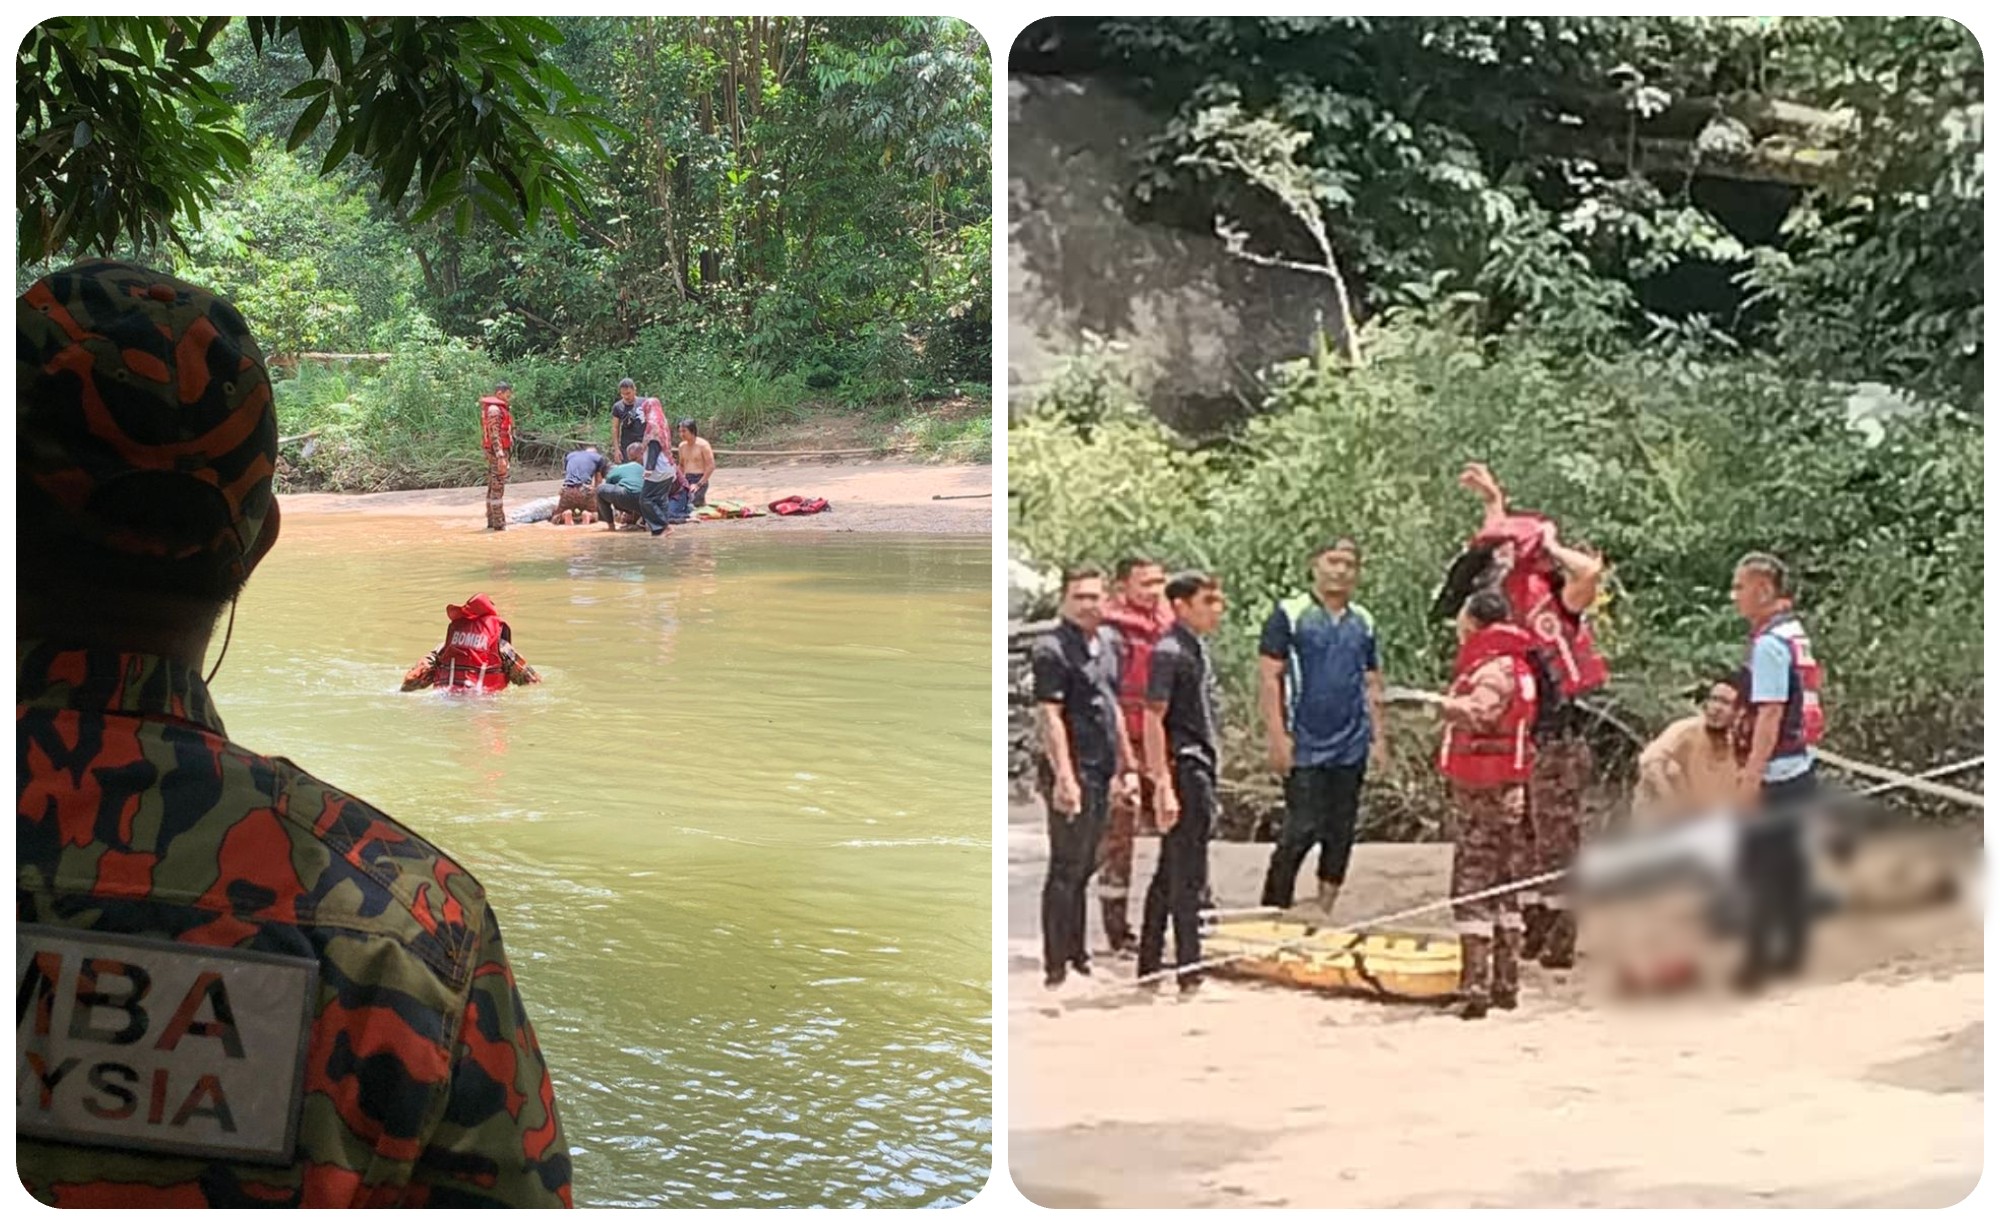 Father, children aged 6 and 9, drown in river near Kuala Kubu Baharu